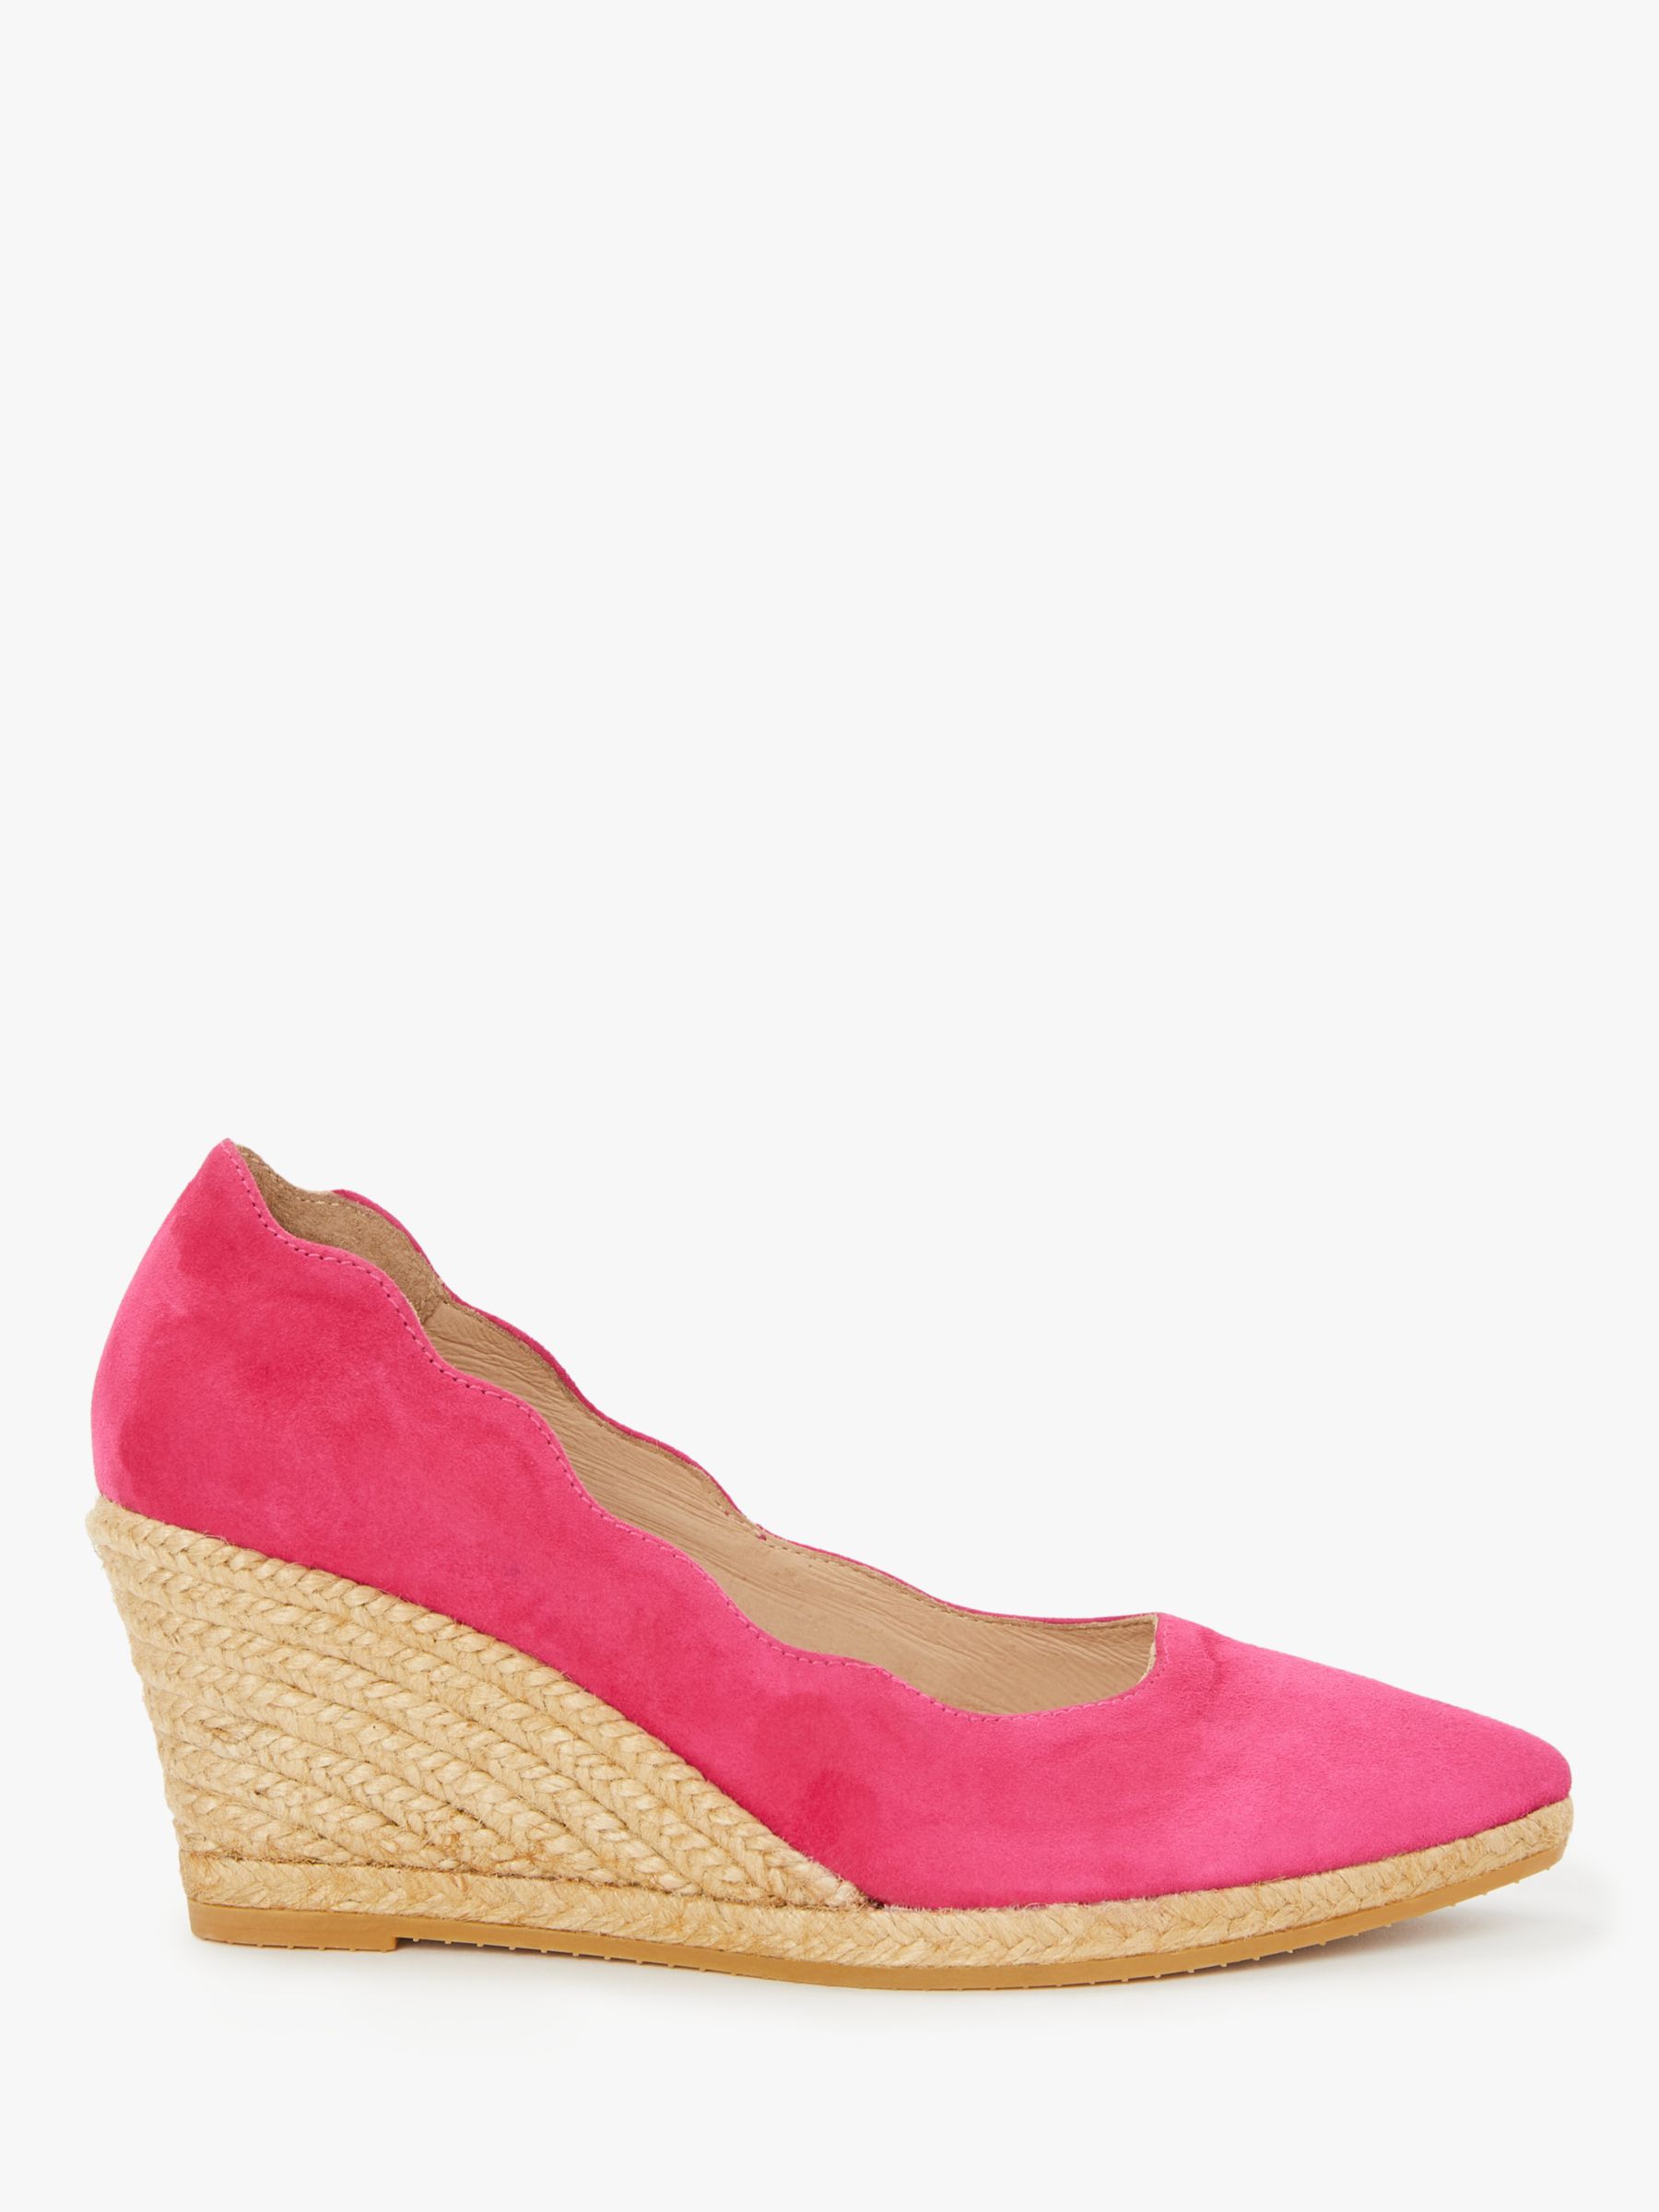 John Lewis & Partners Keeva Wedge Heel Court Shoes, Pink Suede